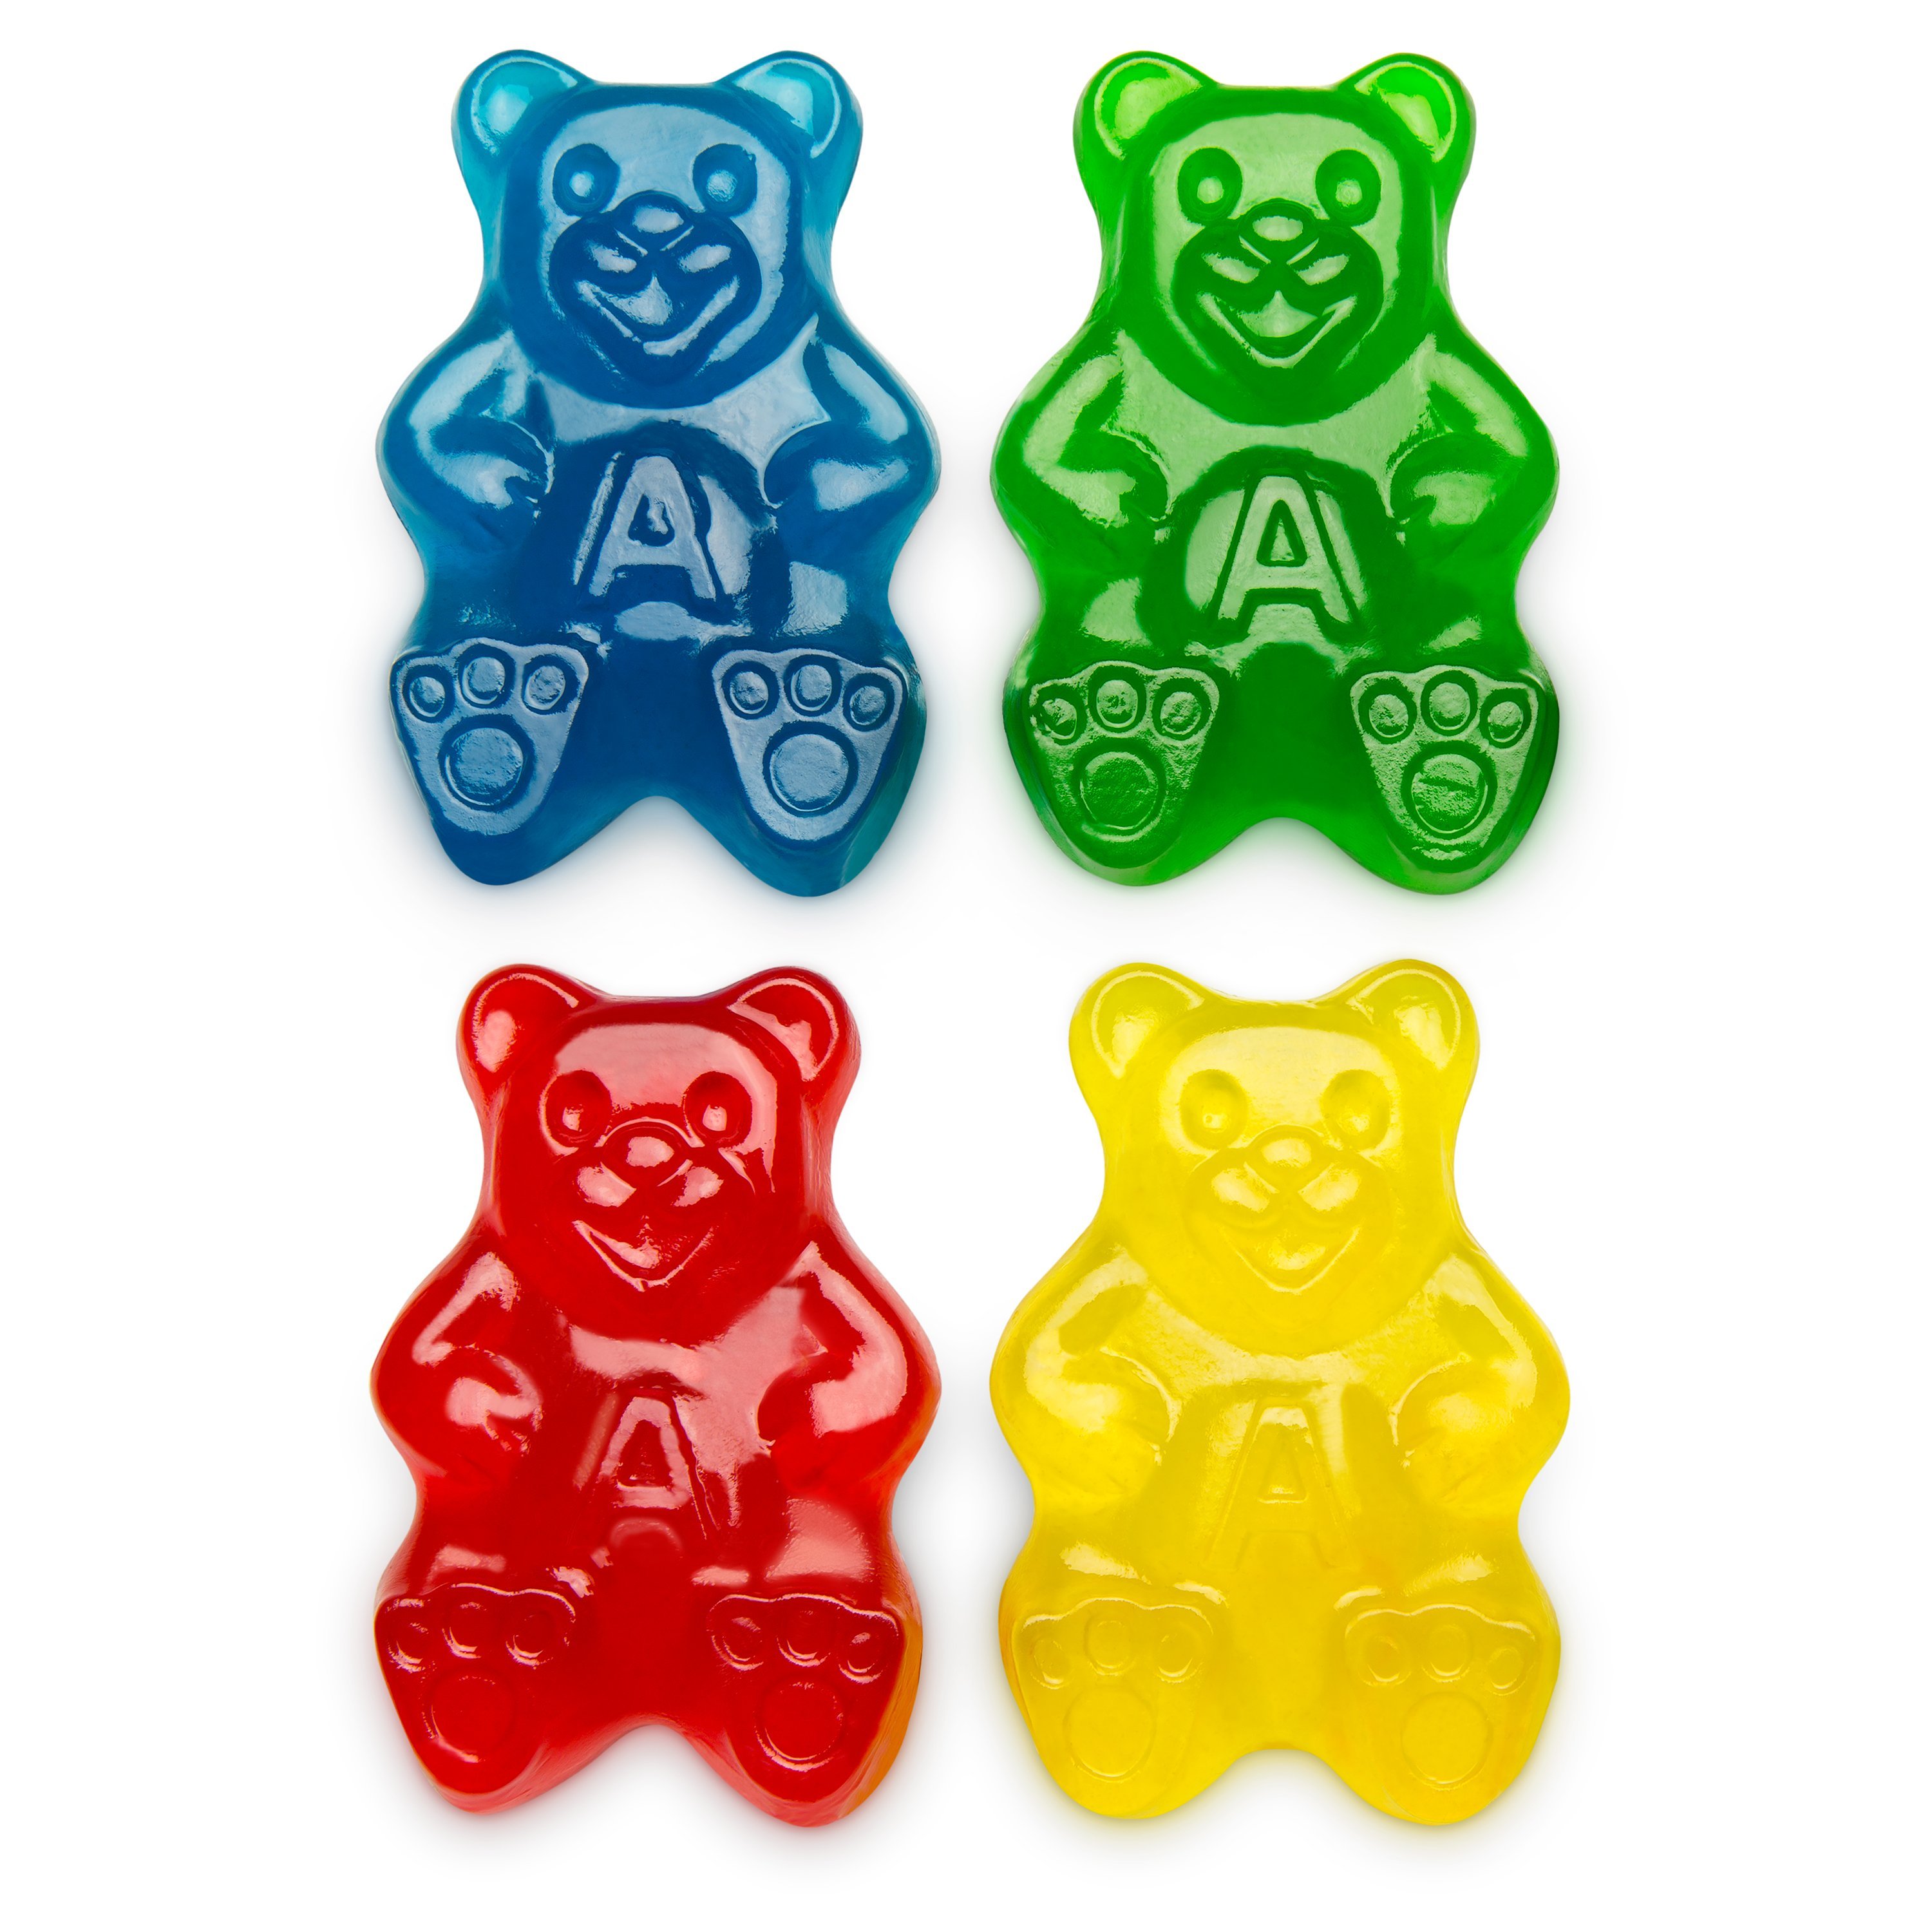 Papa Gummi Bears | Gummi Candy | Gourmet Candy & Snacks | World's ...